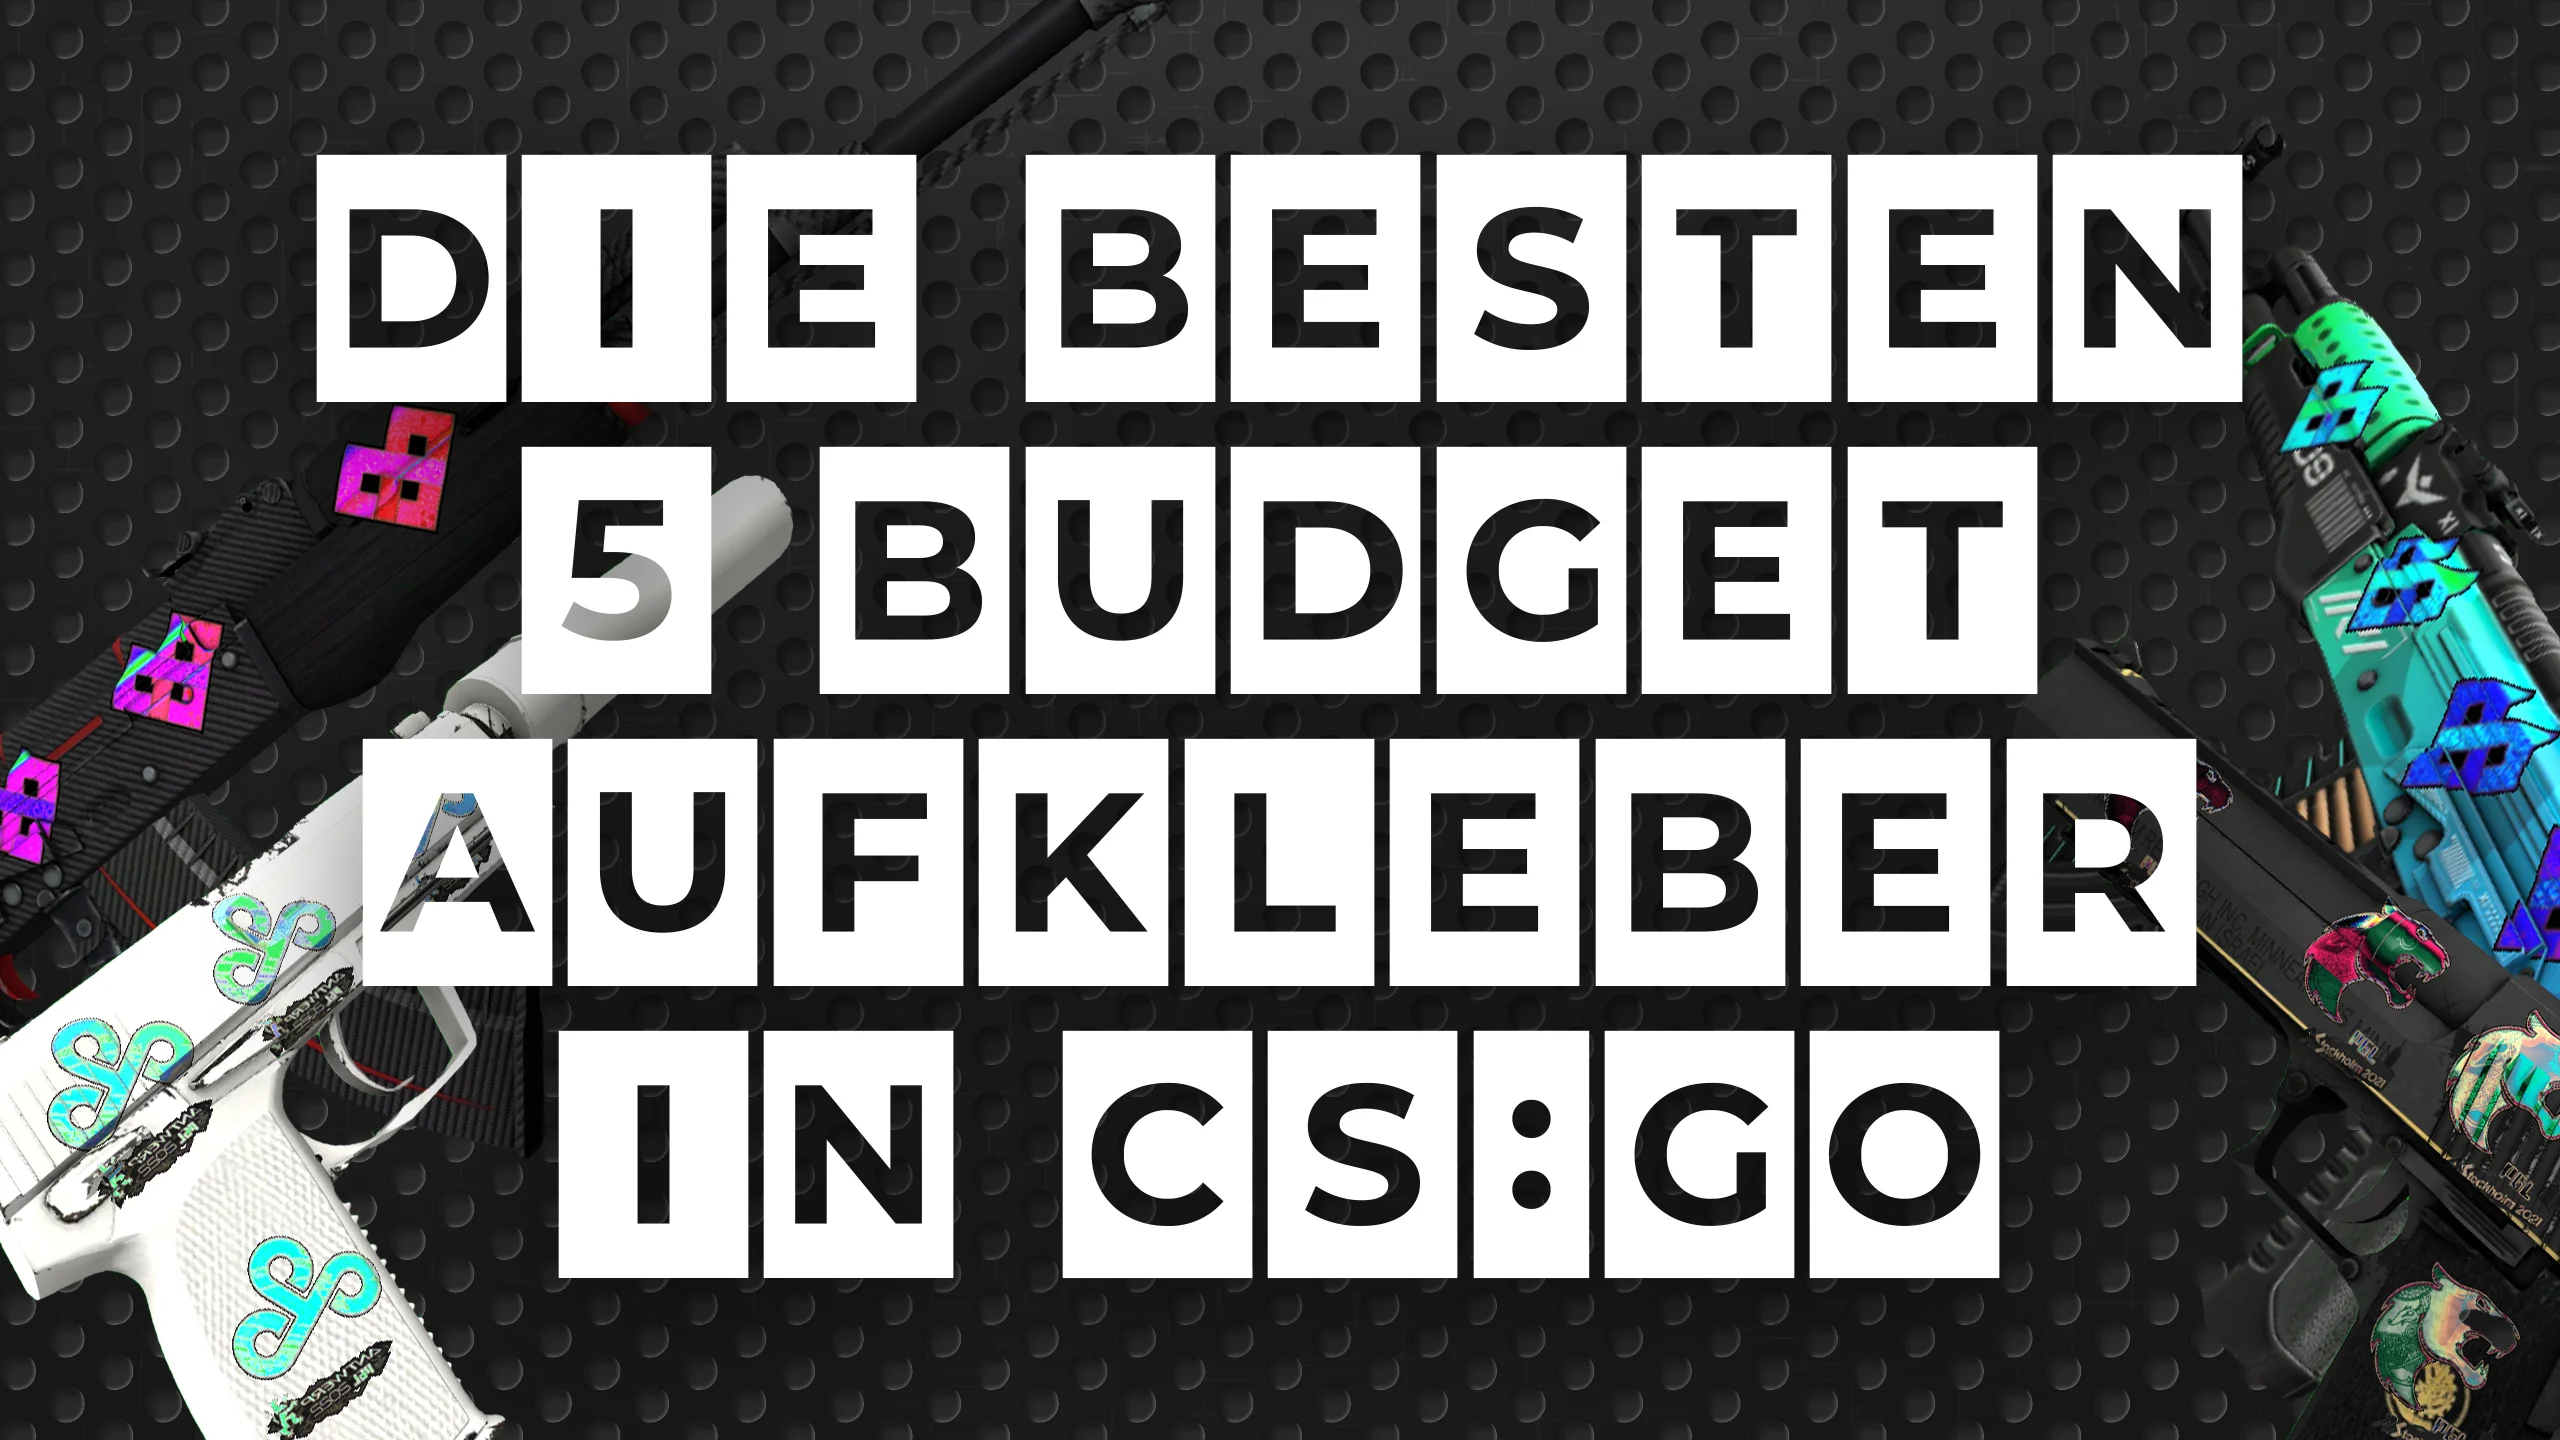 Die 5 besten Budget Aufkleber in CS:GO